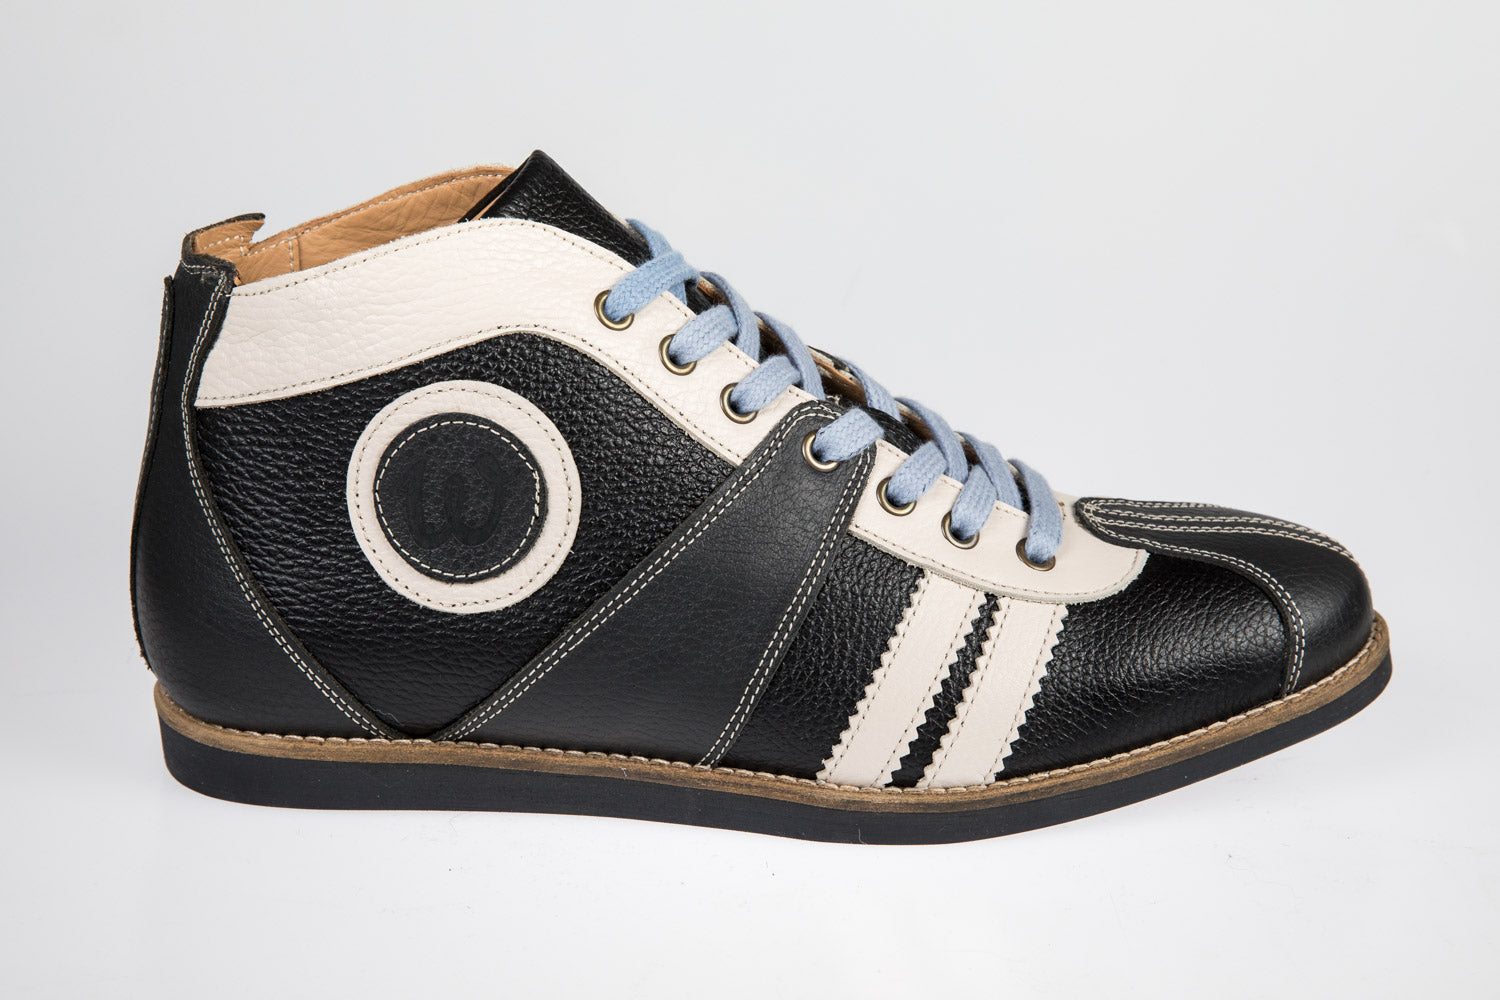 "The Racer" retro Leder Sneaker grau/schwarz/weiß